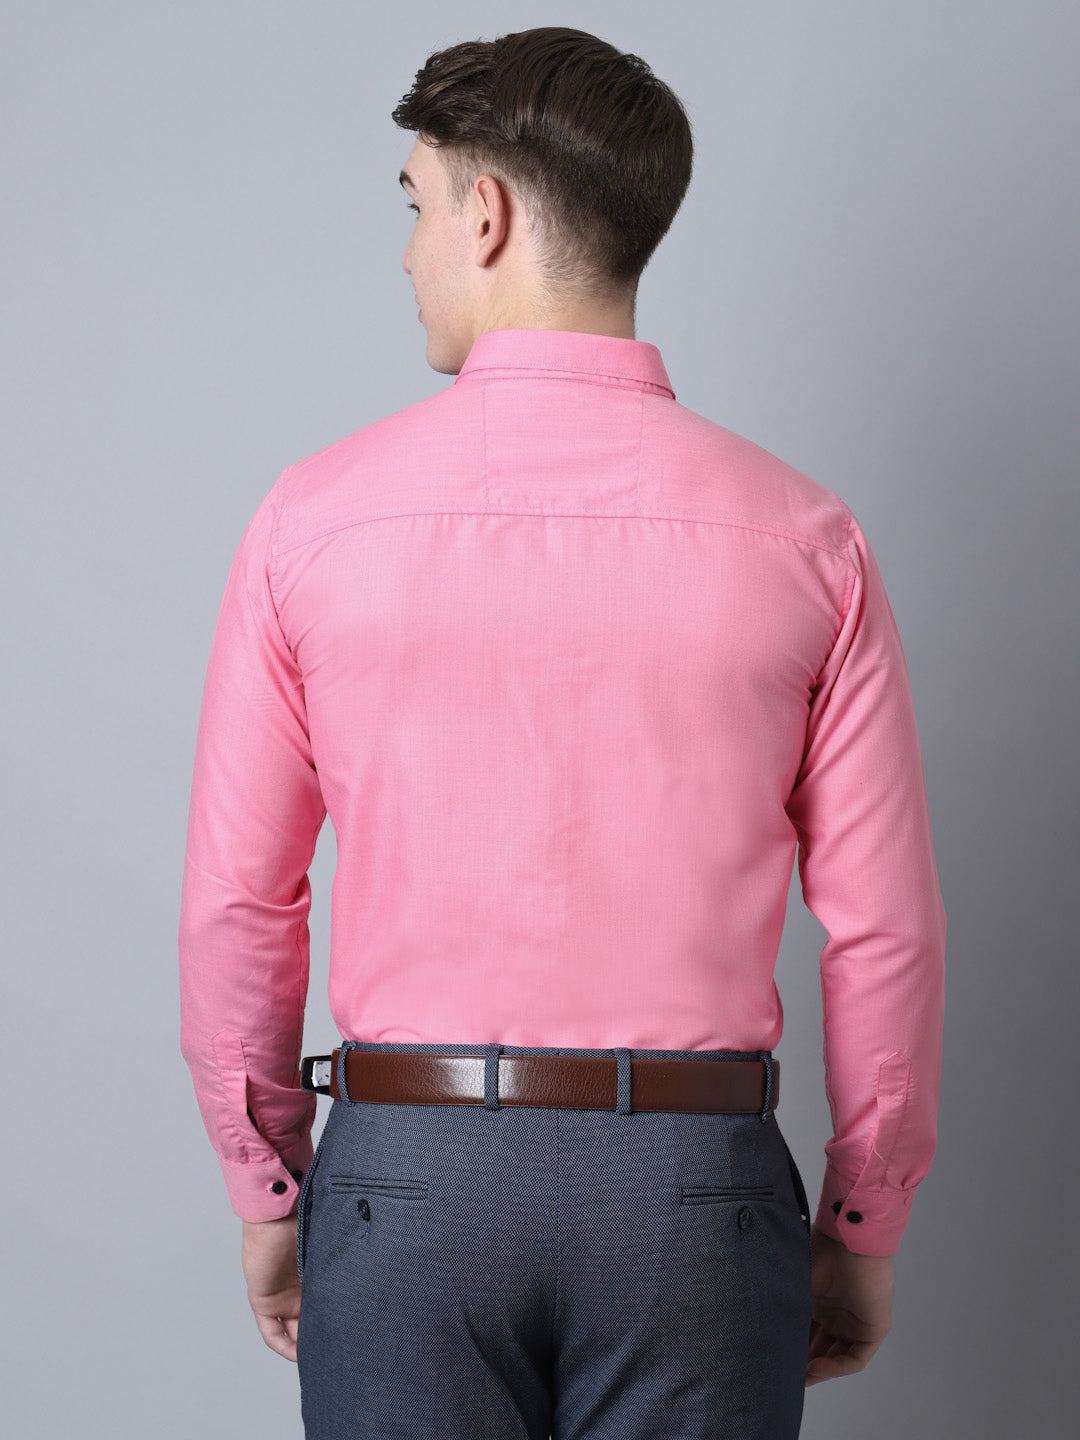 Majestic Man Versatile Solid Formal Shirt - Pink